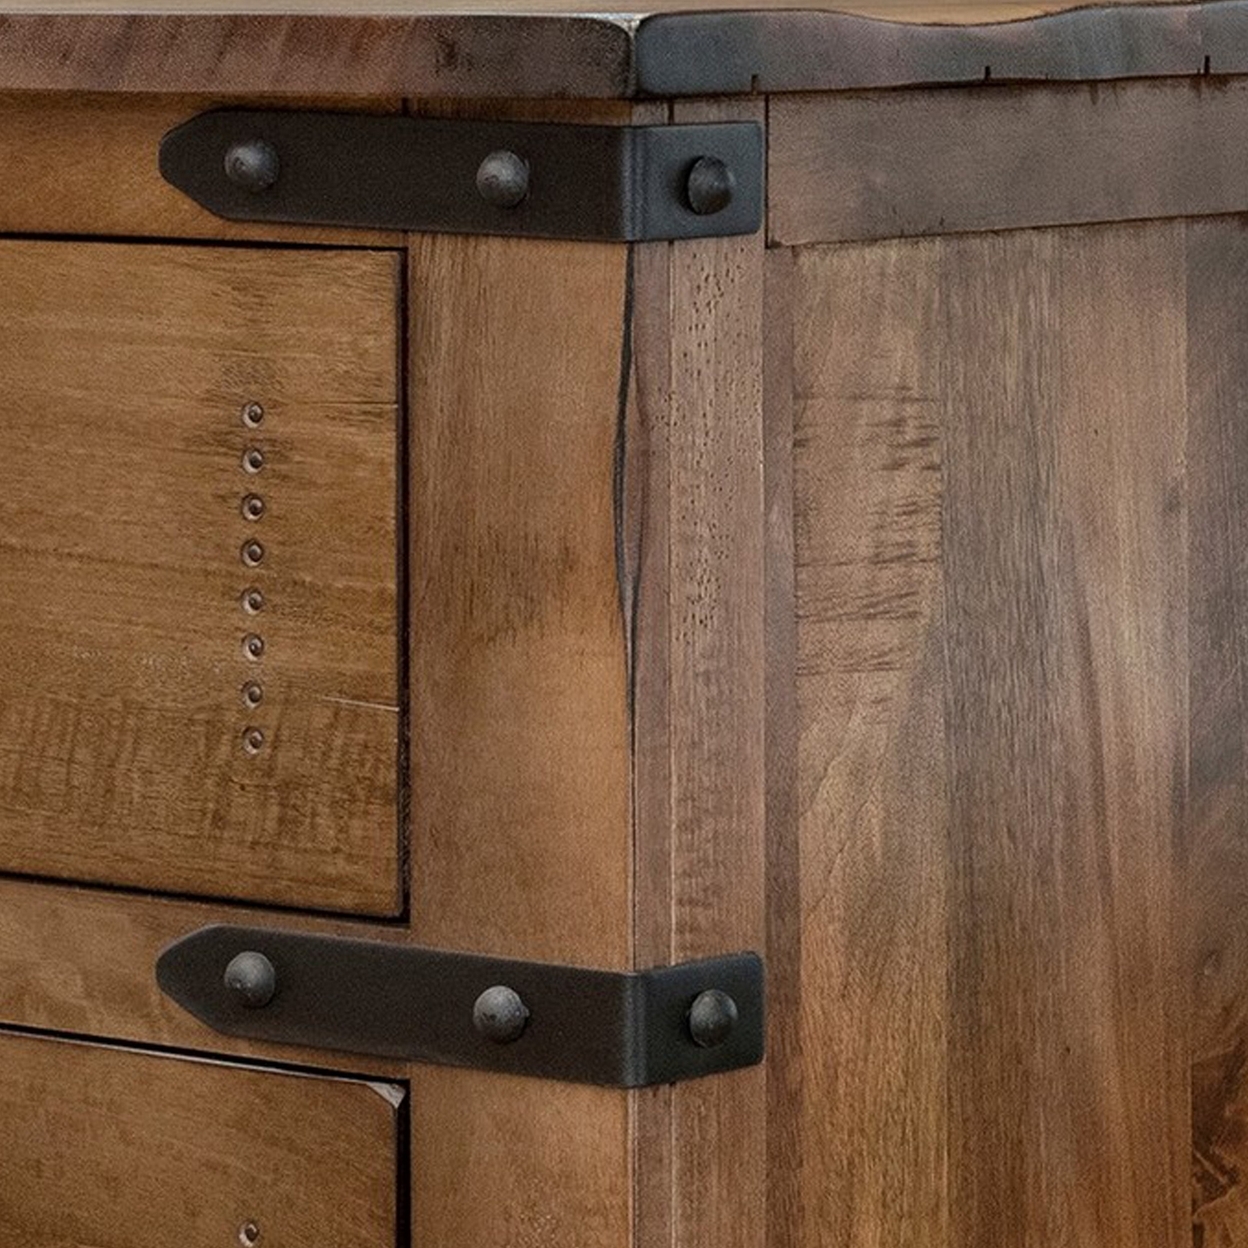 Umey 31 Inch 2 Drawer Nightstand, With Iron Belt Accents, Brown Mango Wood- Saltoro Sherpi